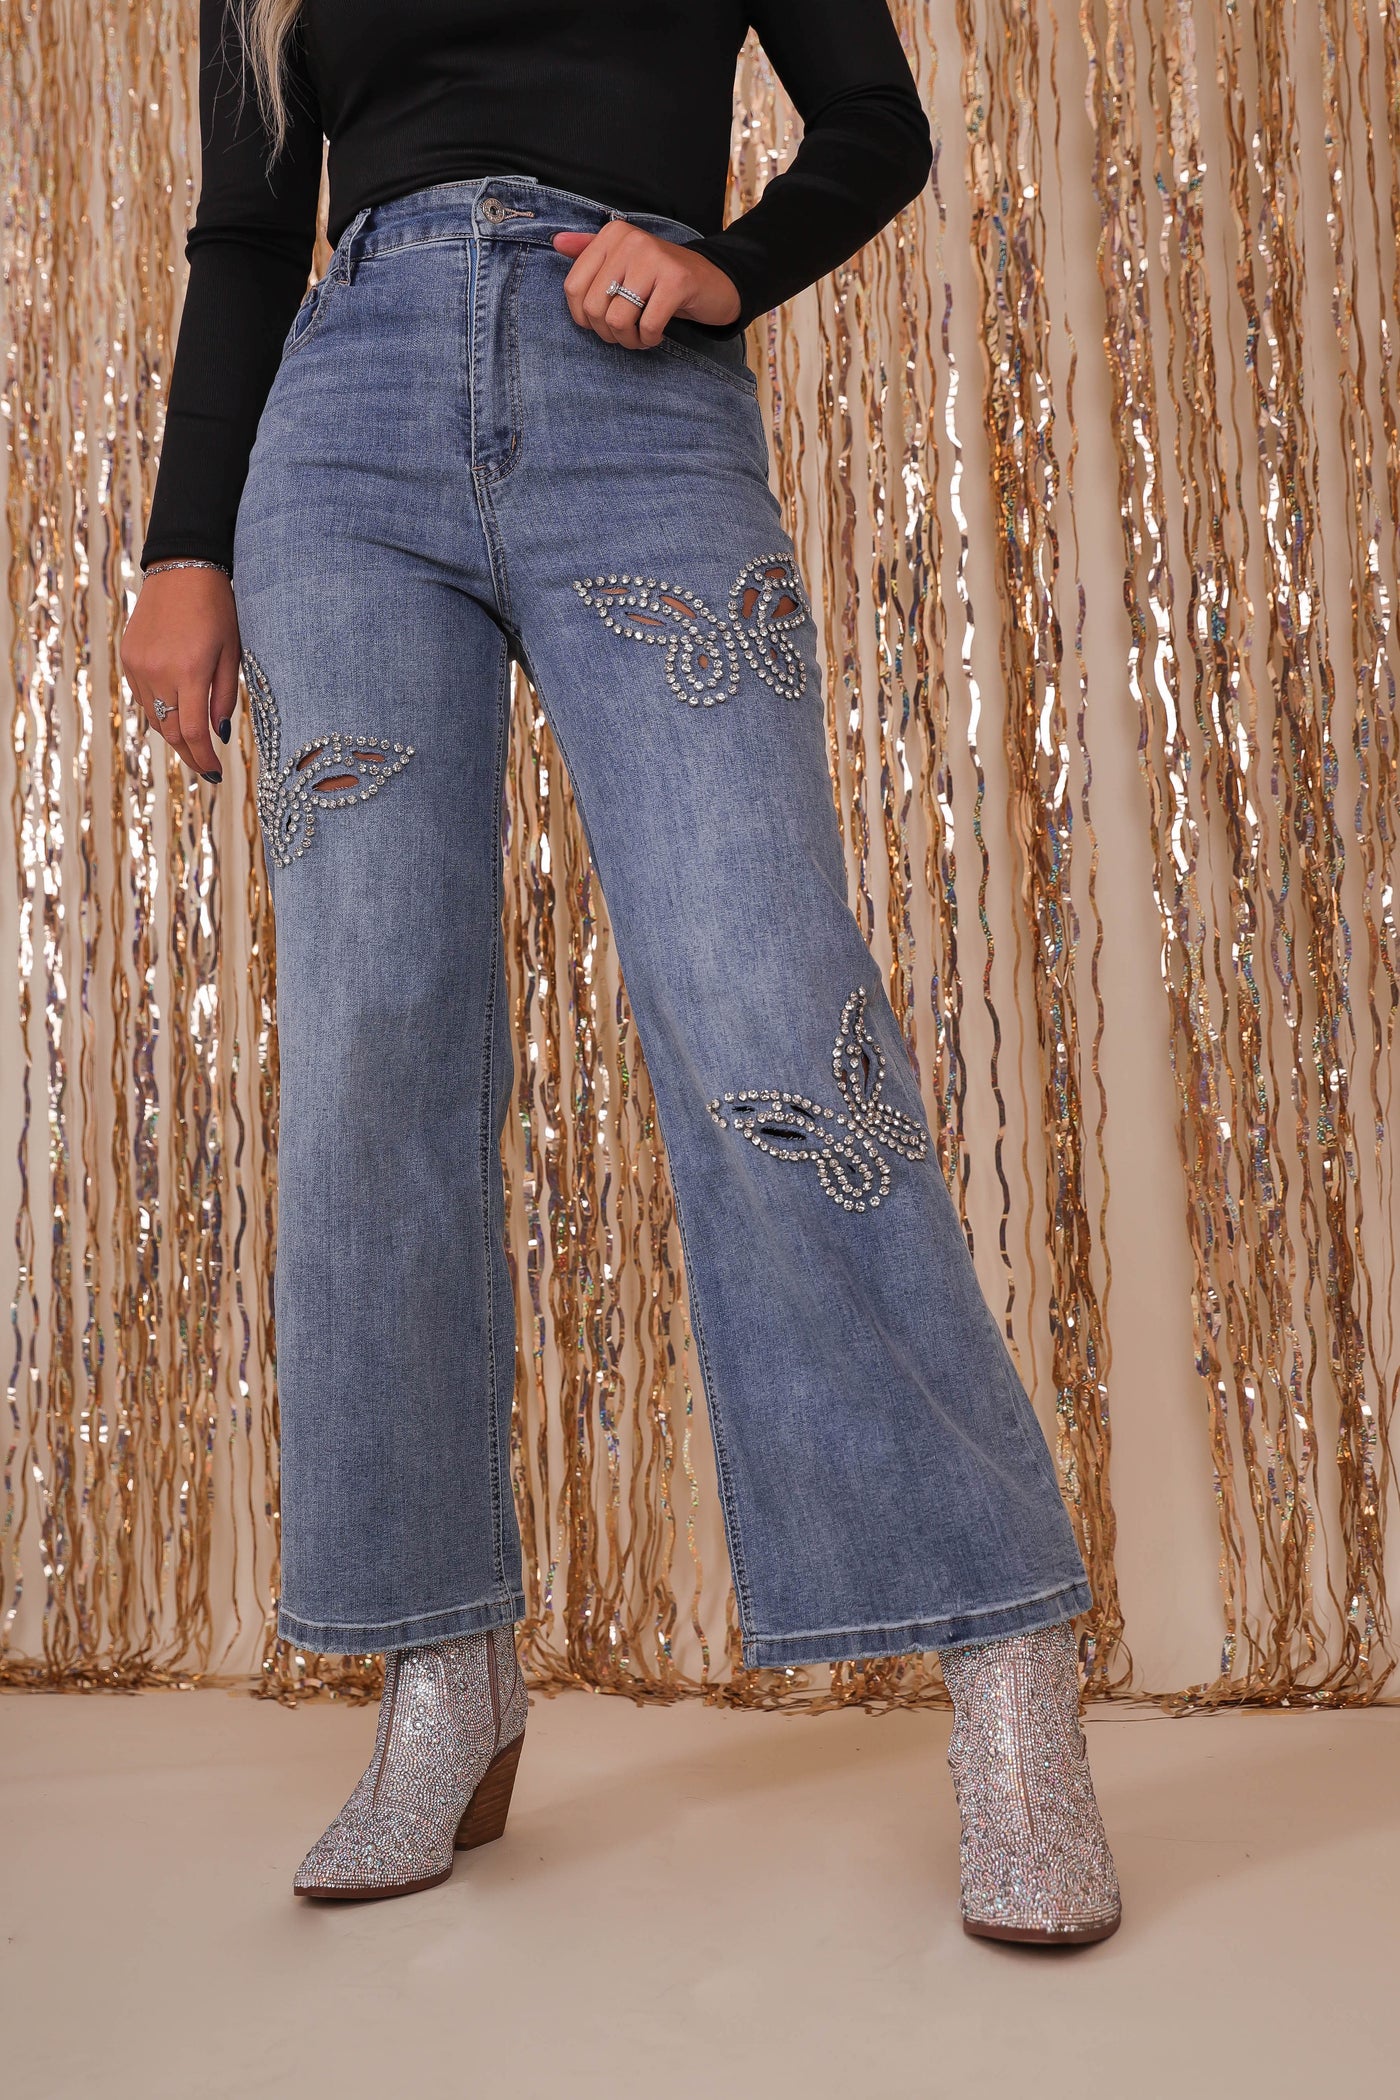 Women's Rhinestone Straight Leg Jeans- Women's Rhinestone Butterfly Denim- Taylor Butterfly Jeans